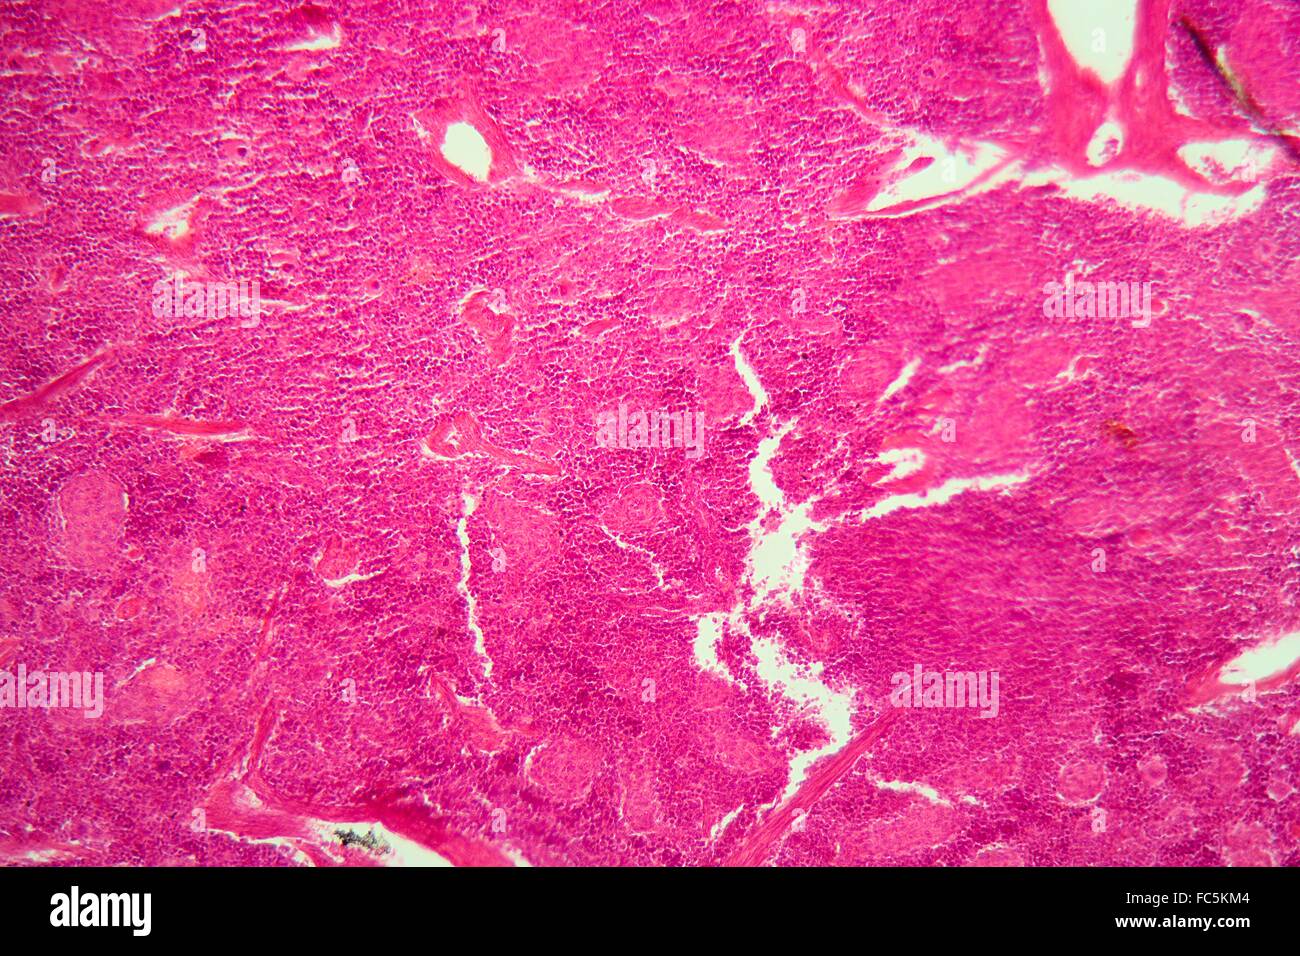 Pancreas tissue under the microscope. Stock Photo